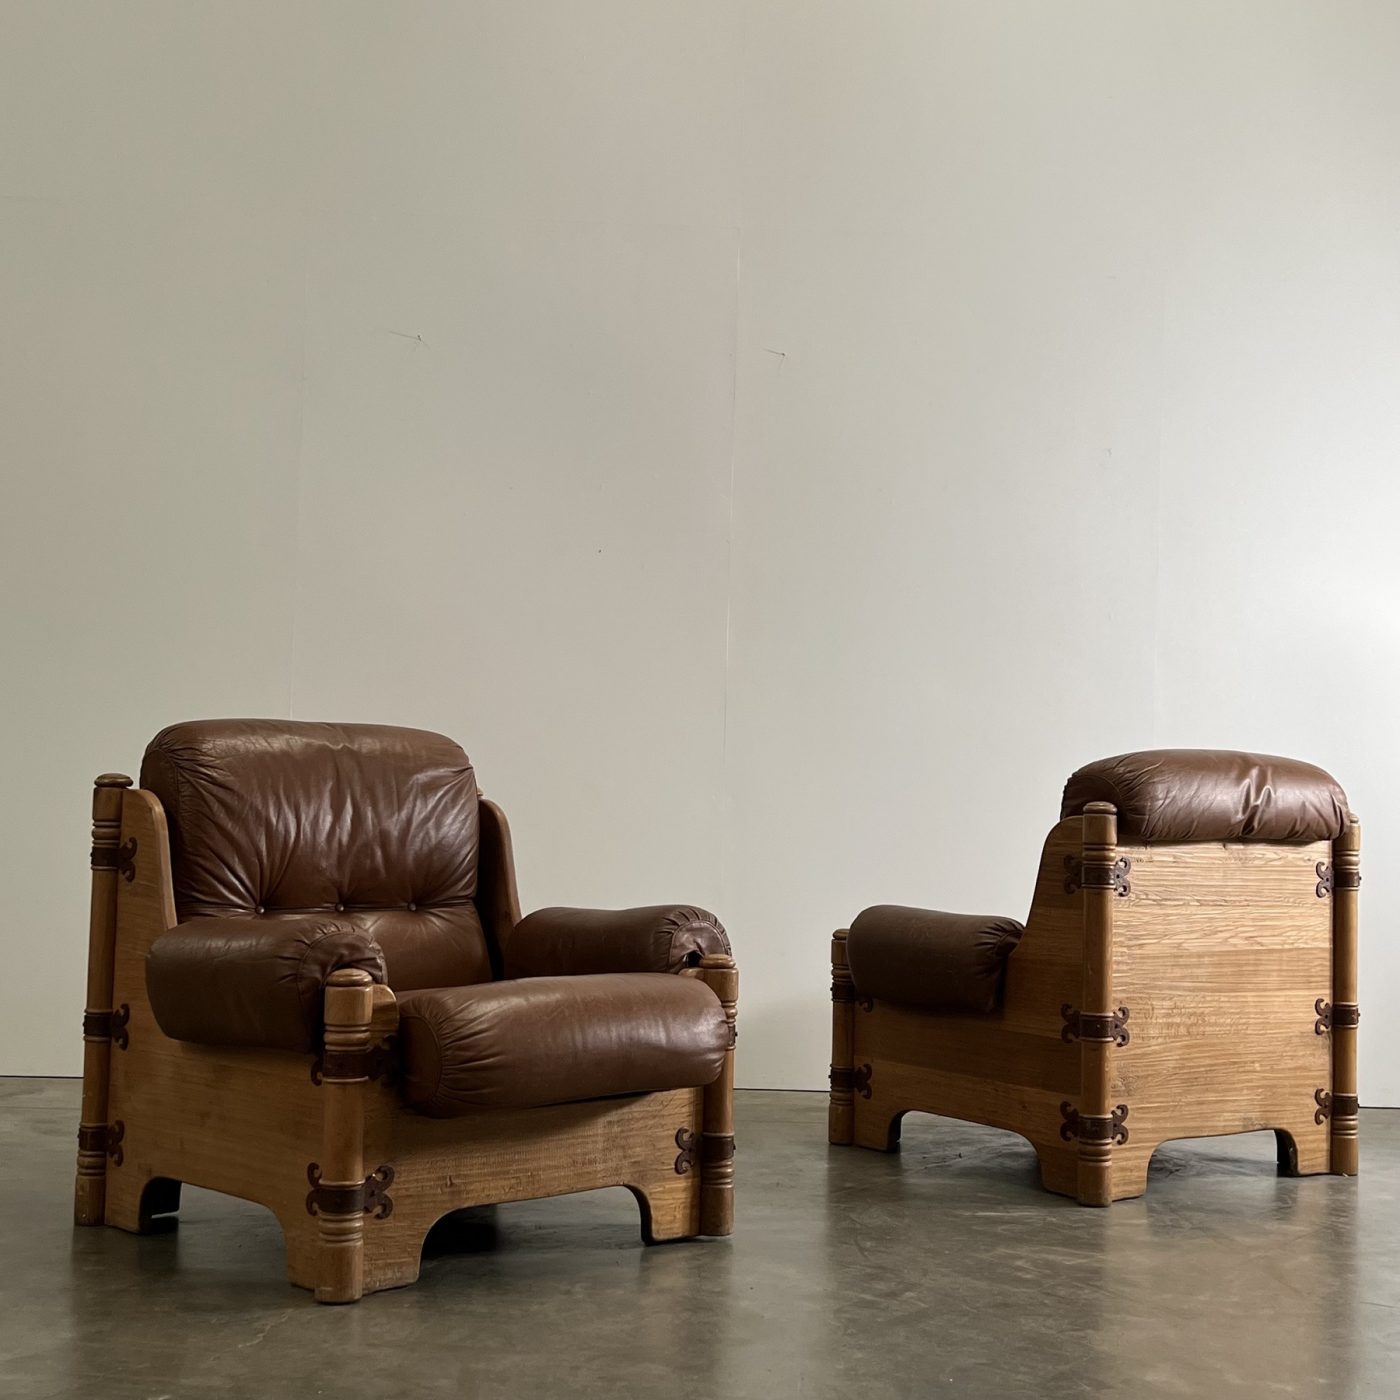 objet-vagabond-leather-set0002